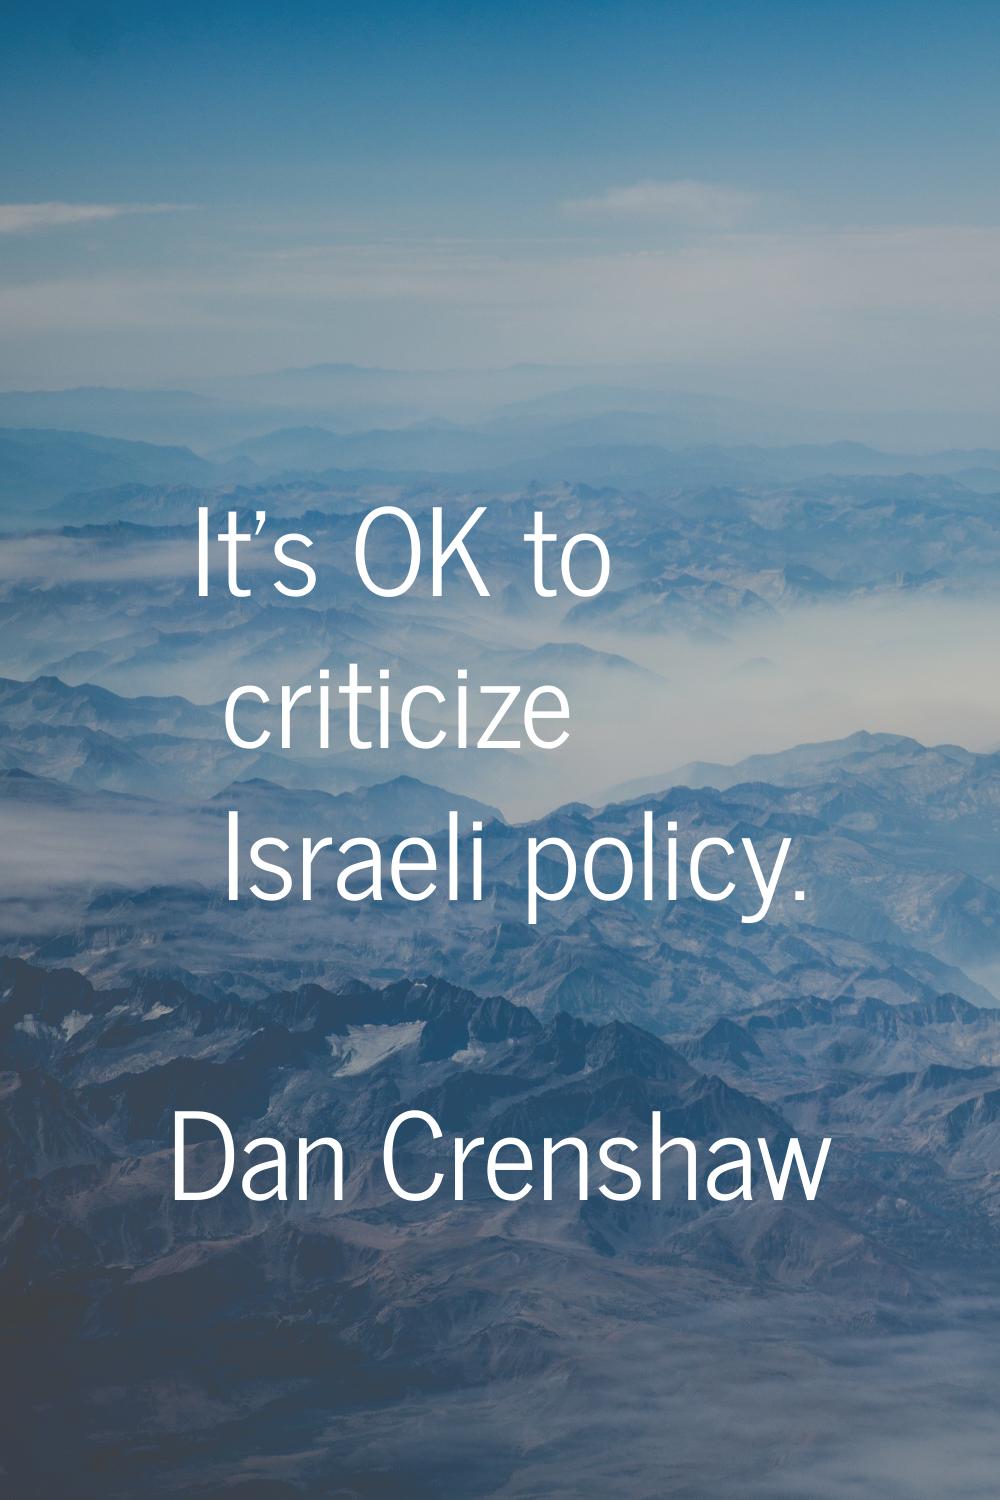 It's OK to criticize Israeli policy.